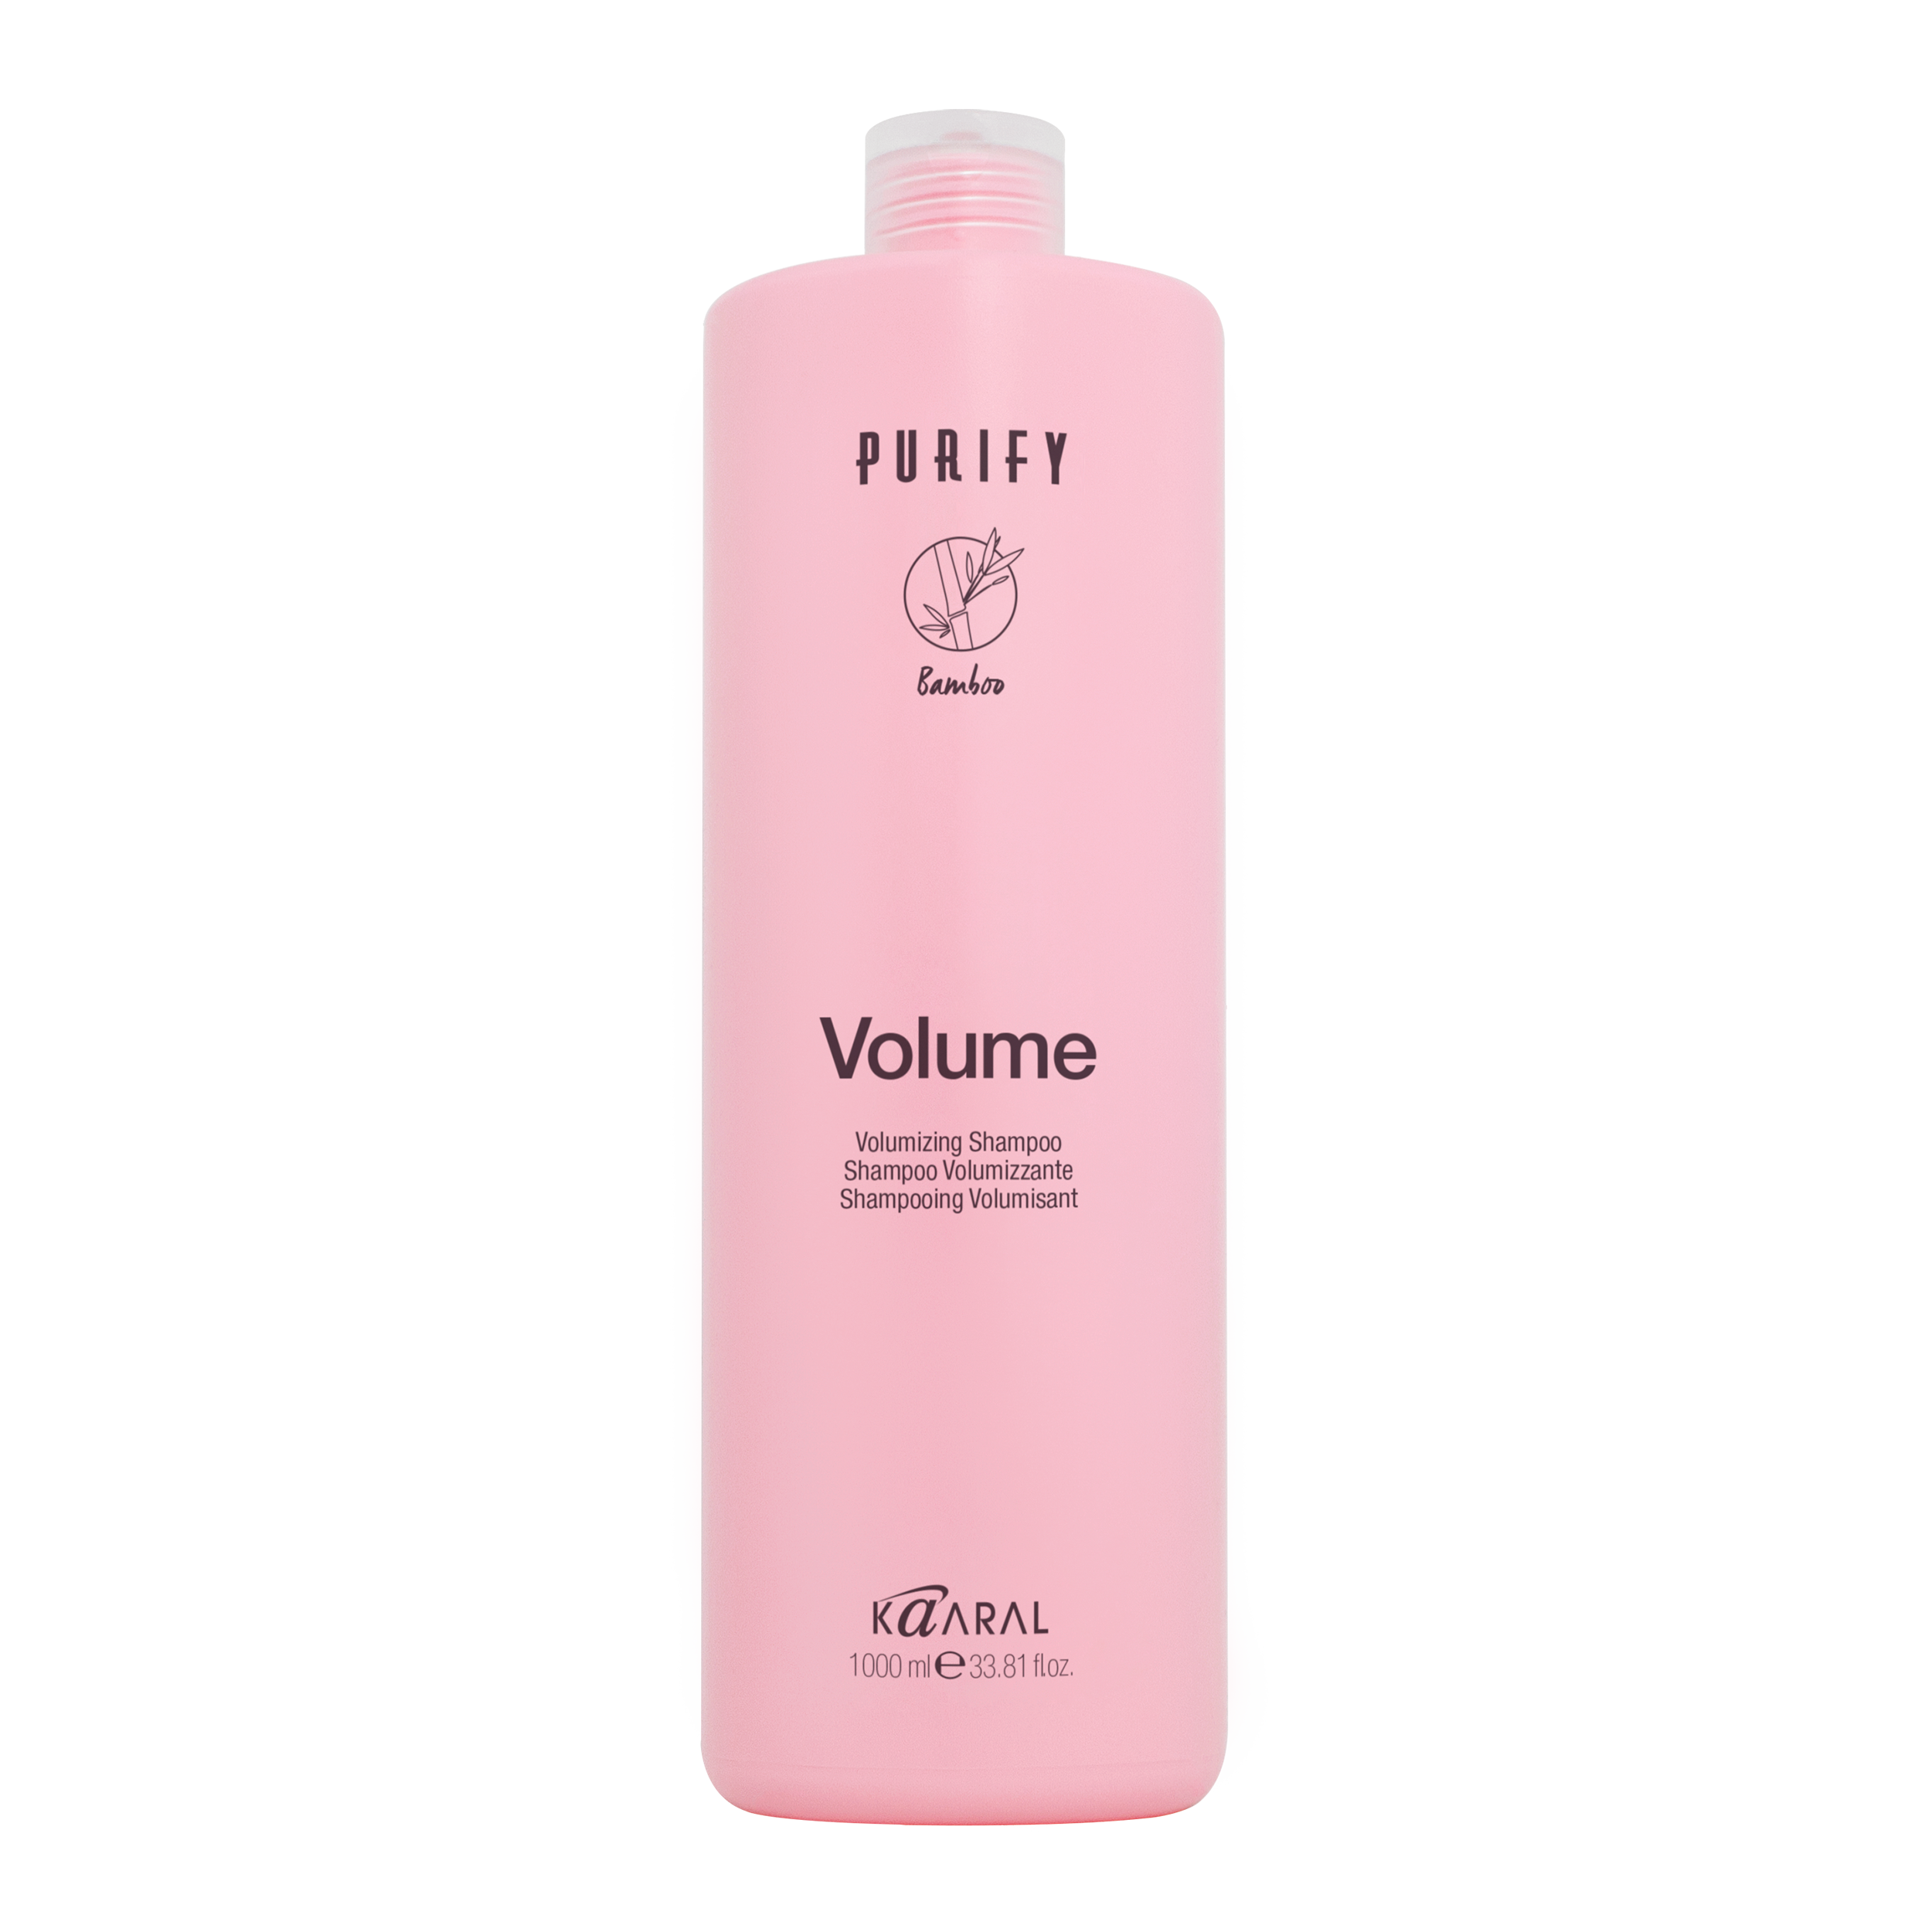 Kaaral - Purify Volume Shampoo Liter Size - Creata Beauty - Professional Beauty Products